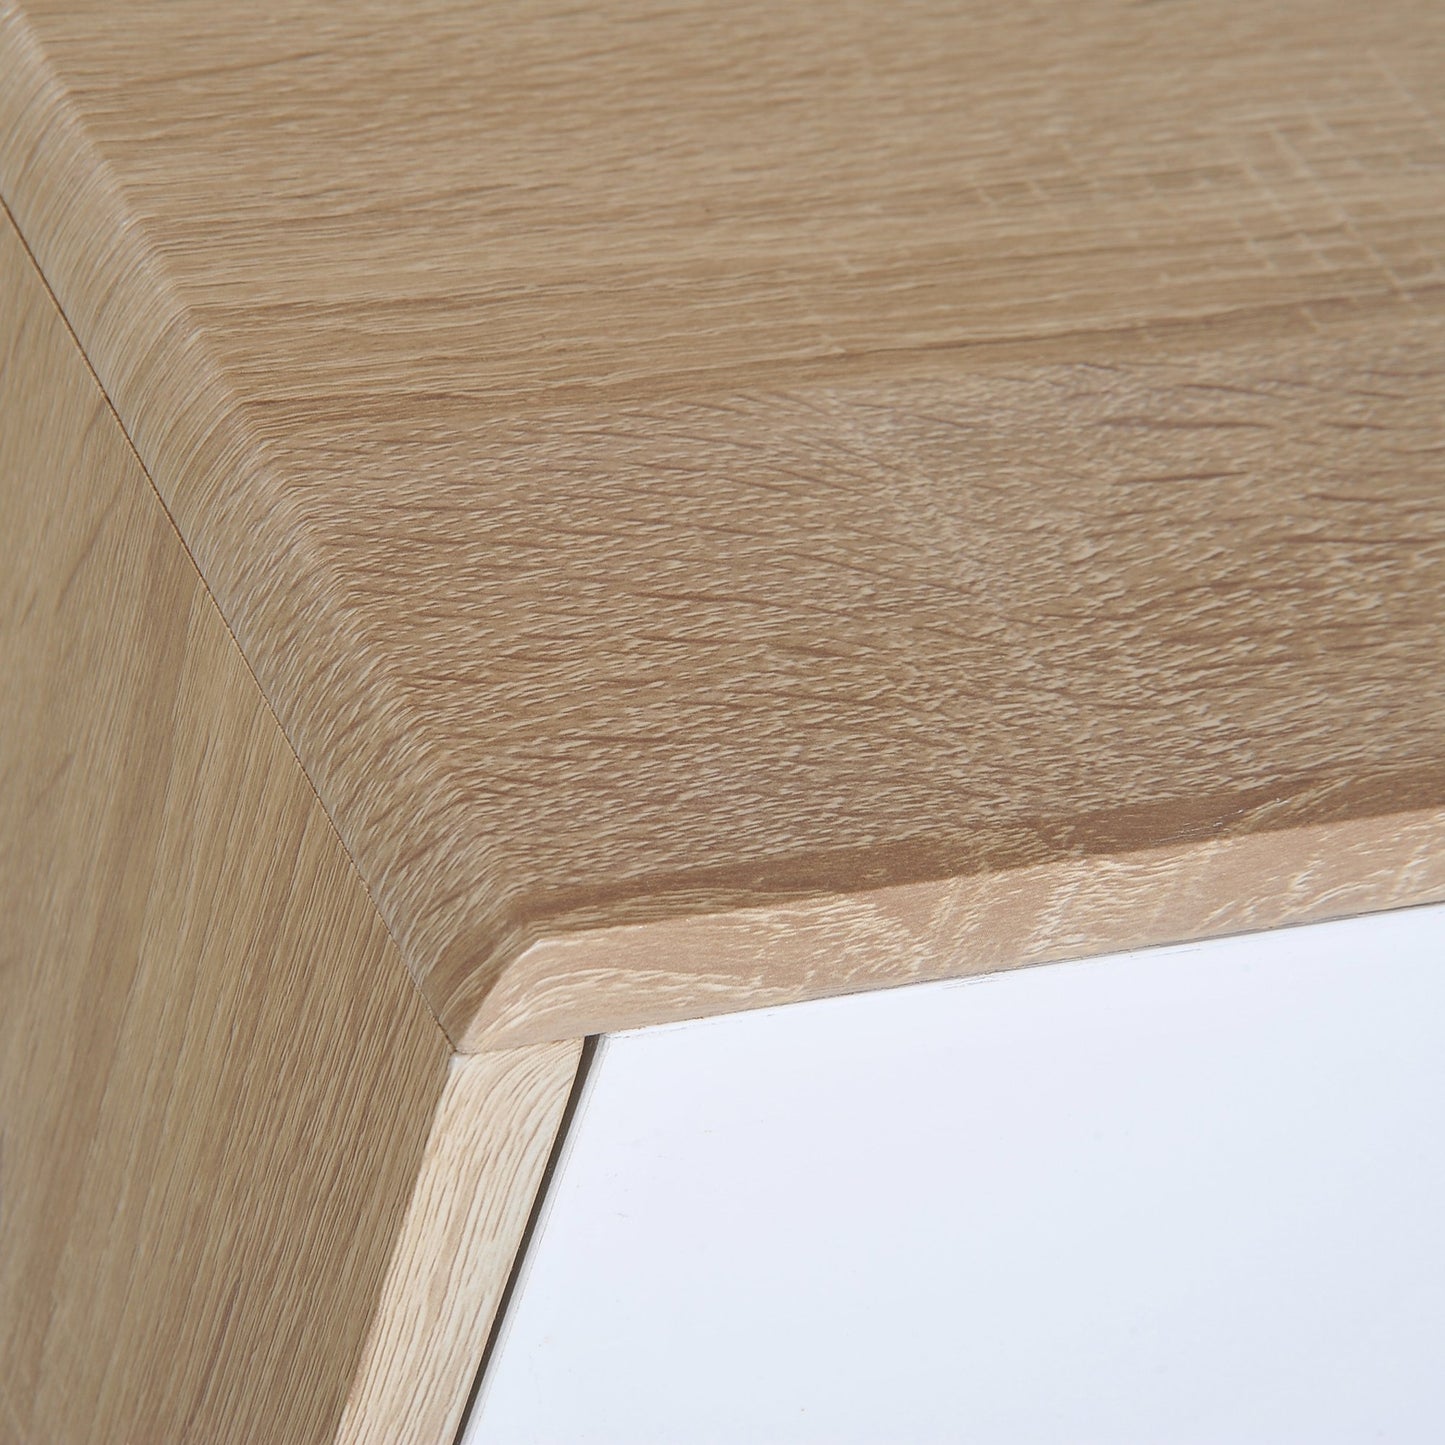 HOMCOM Side Cabinet, 50Wx40D x70H cm-Natural Wood Colour